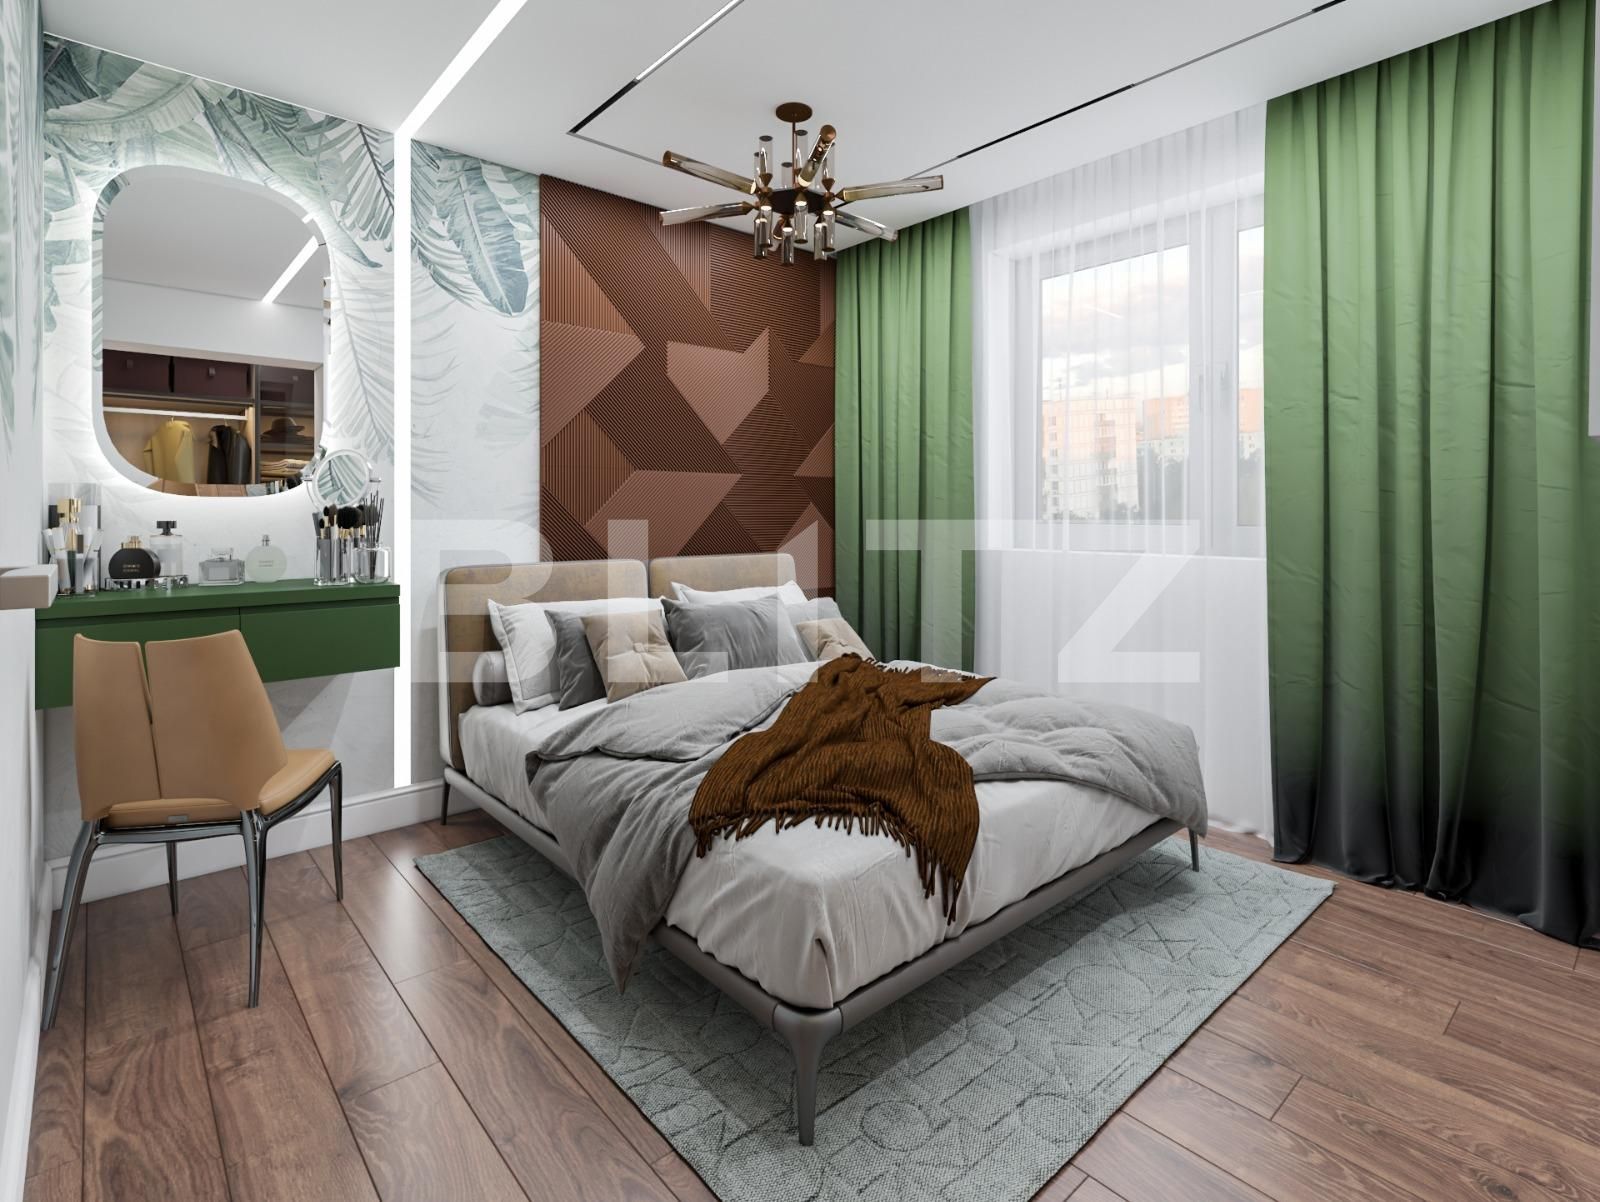 Apartament premium de 2 camere cu sistem smart home, 60.5 mp, in cartier rezidential